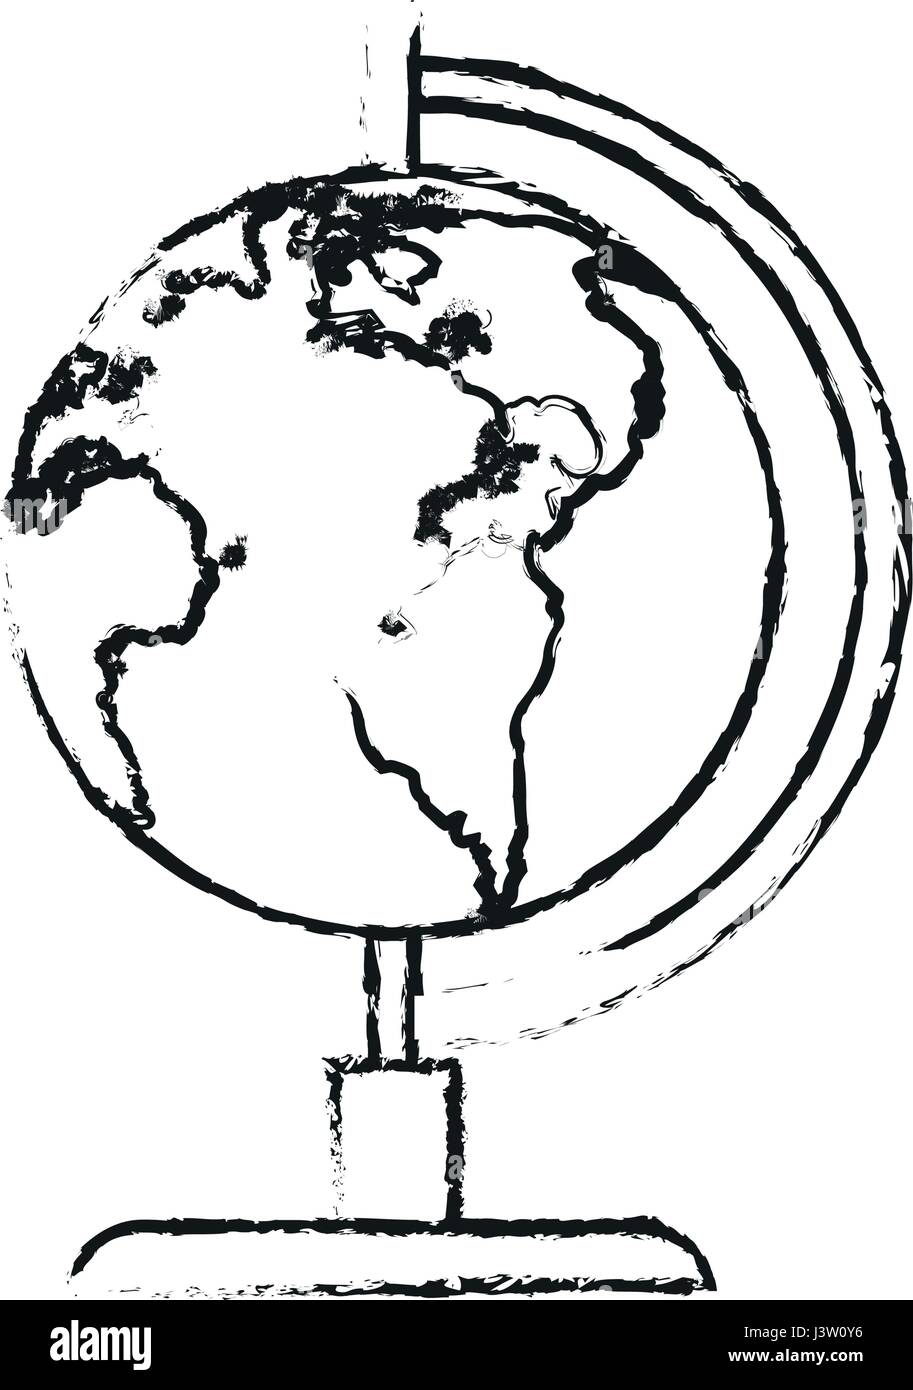 Blurred Silhouette Image Cartoon Earth Globe Stock Vector Image Art Alamy